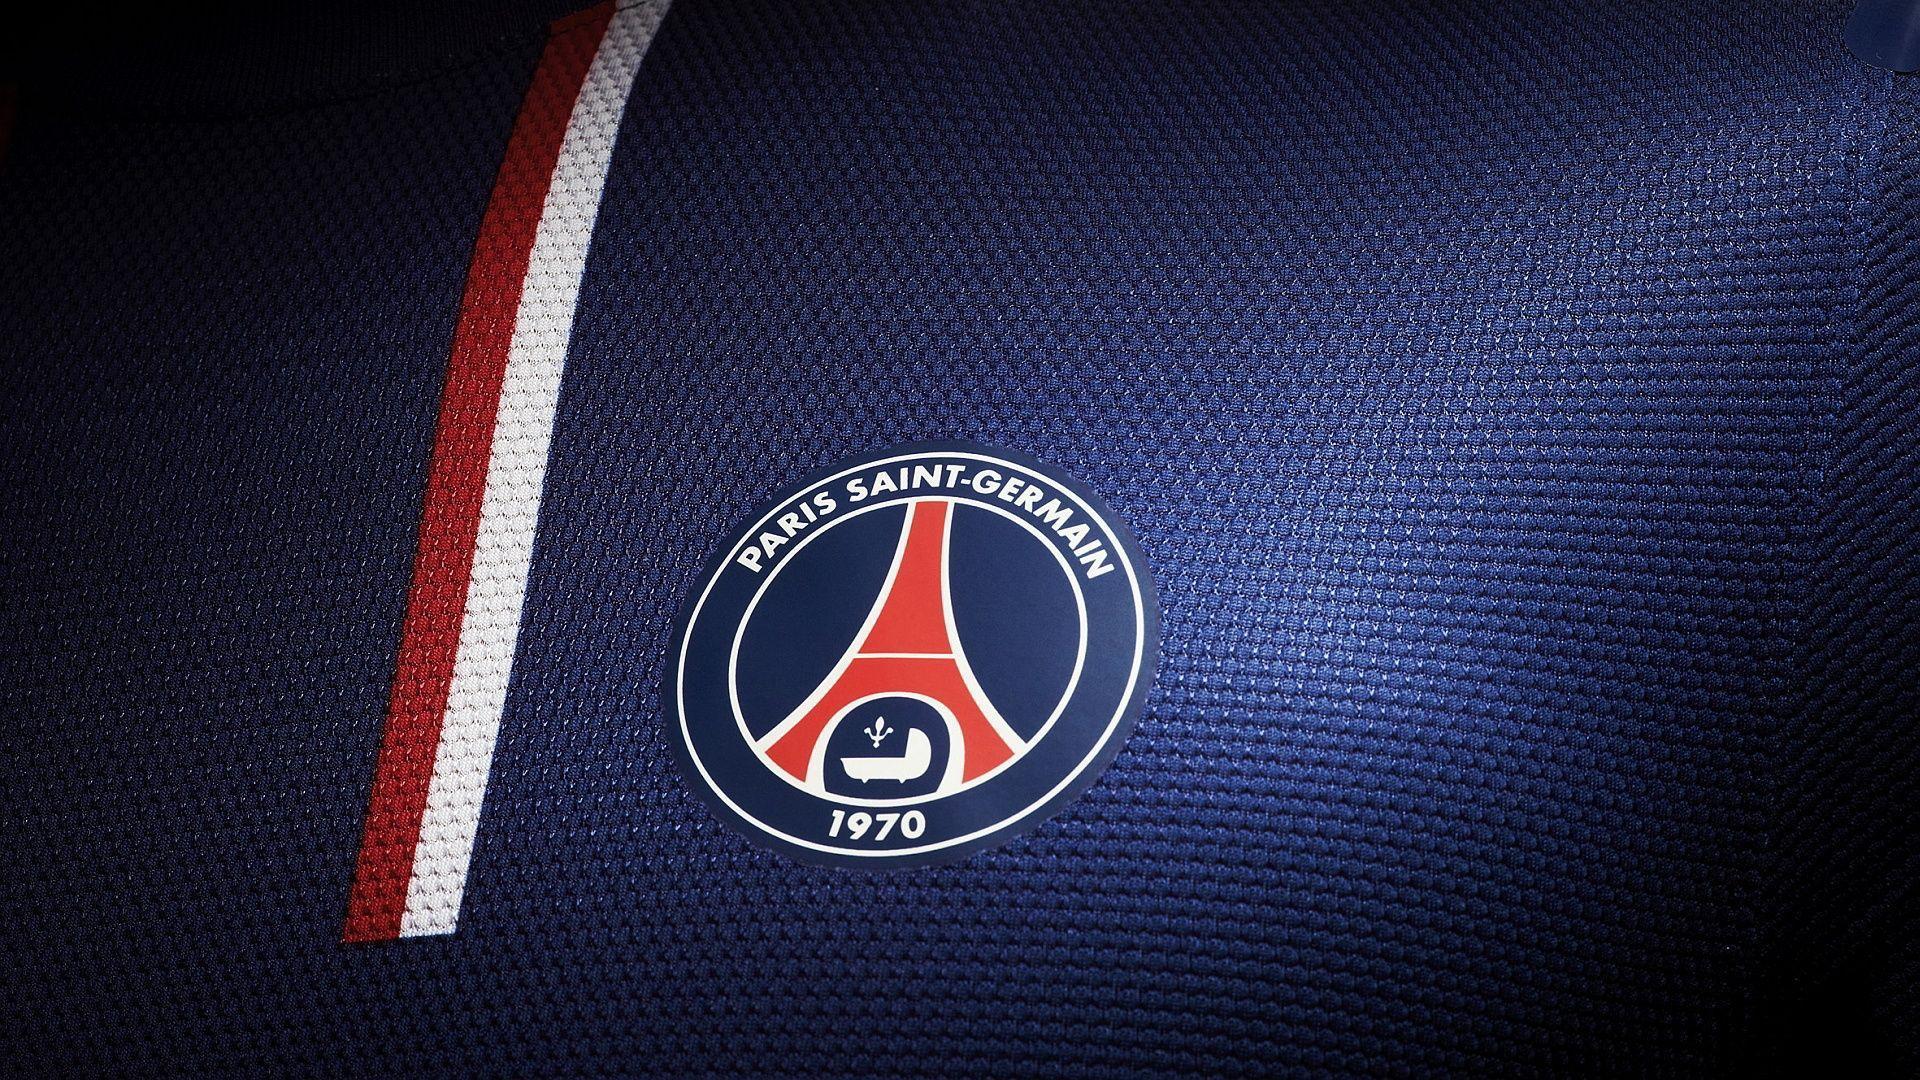 Wallpaper Paris Saint Germain, Football Club, Logo HD, Picture, Image